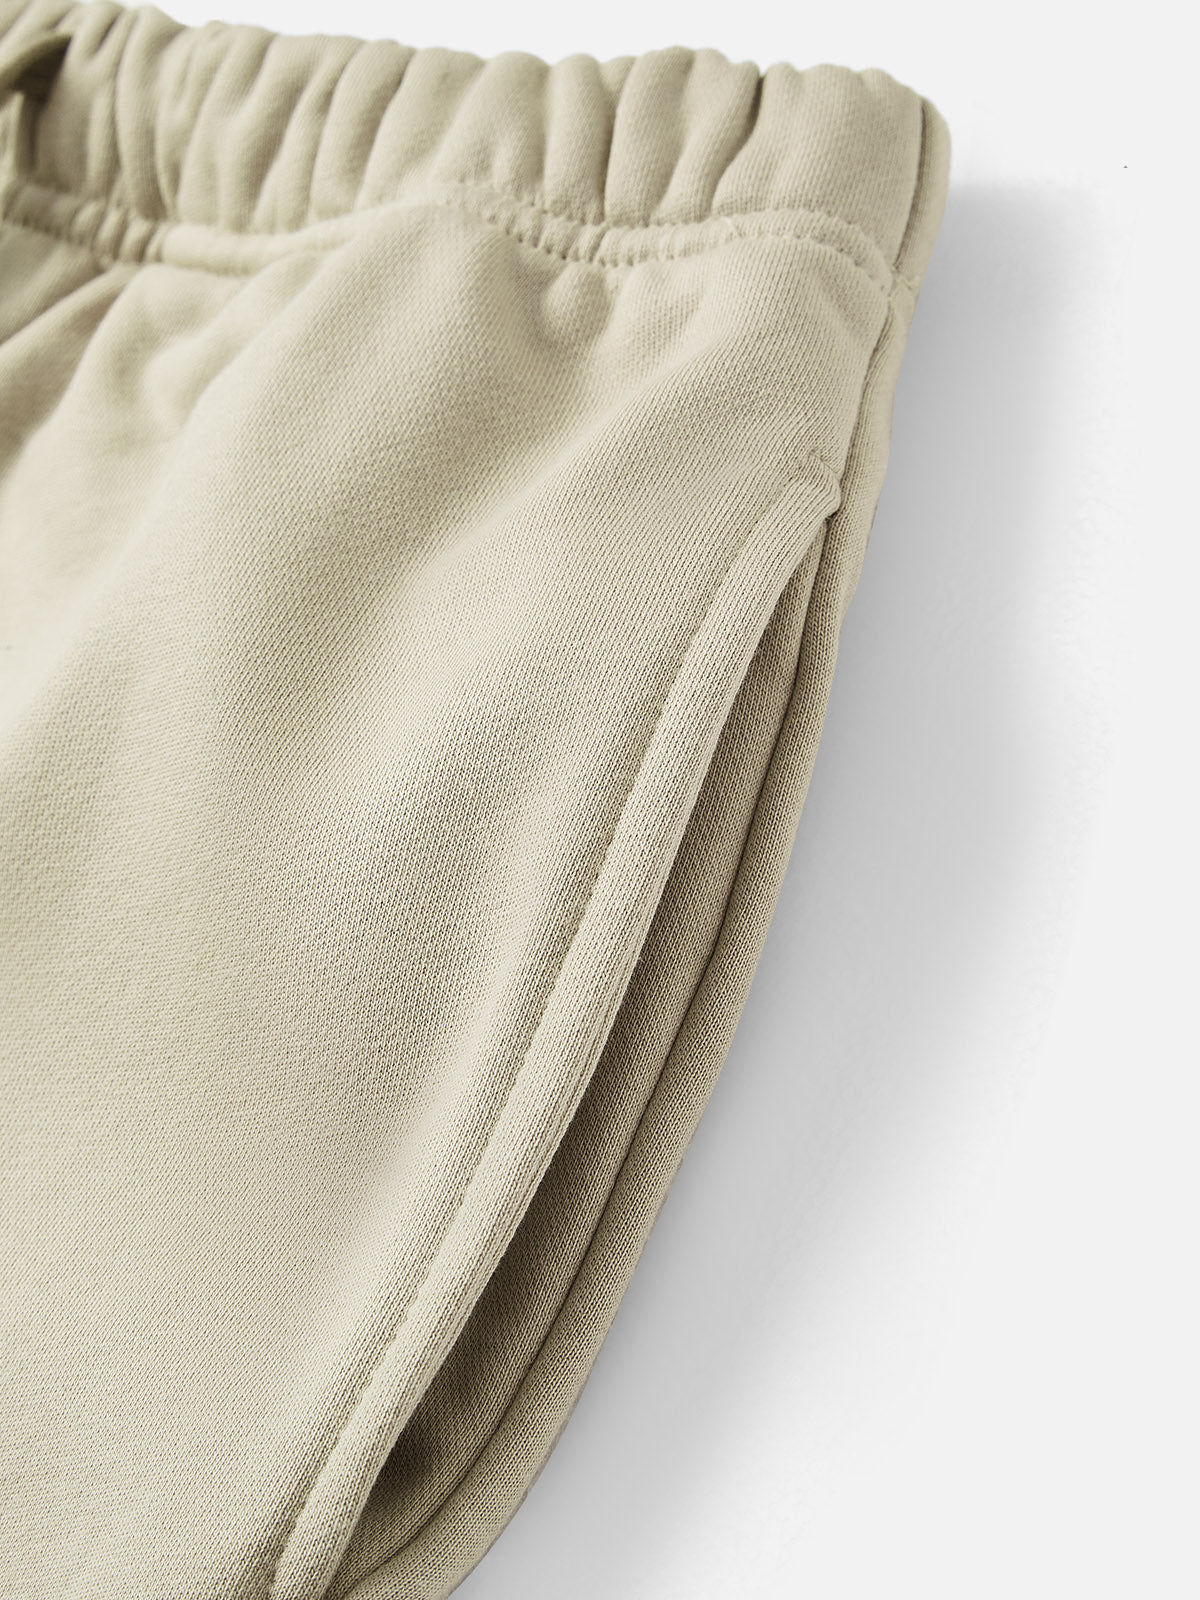 BOUNCE BACK© 360g heavyweight earth-tone printed shorts